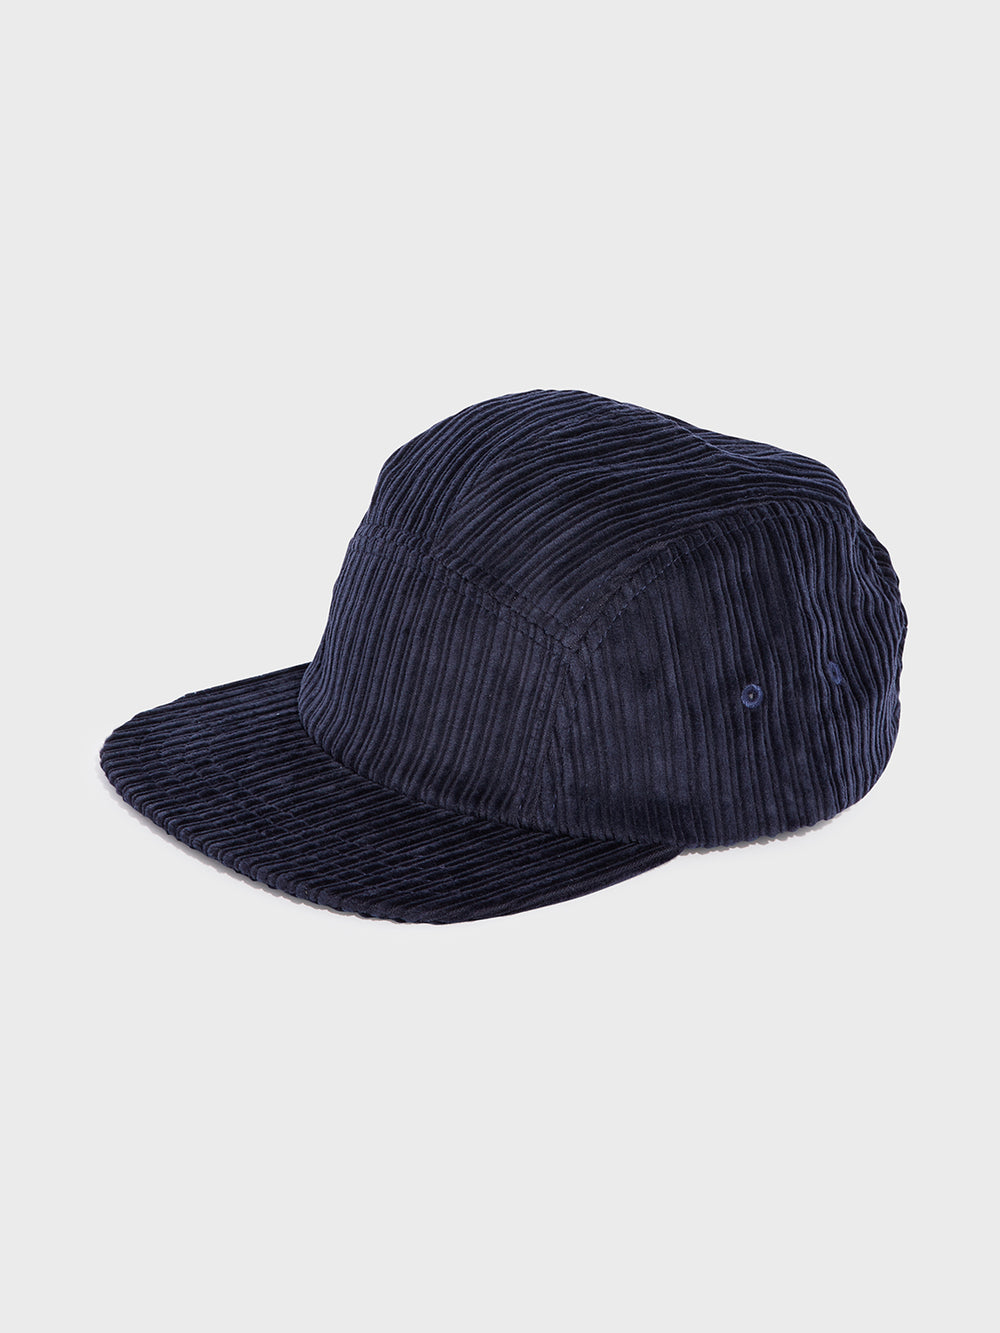 black friday deals ONS Clothing Men's hat cap in NAVY DARREL CORD